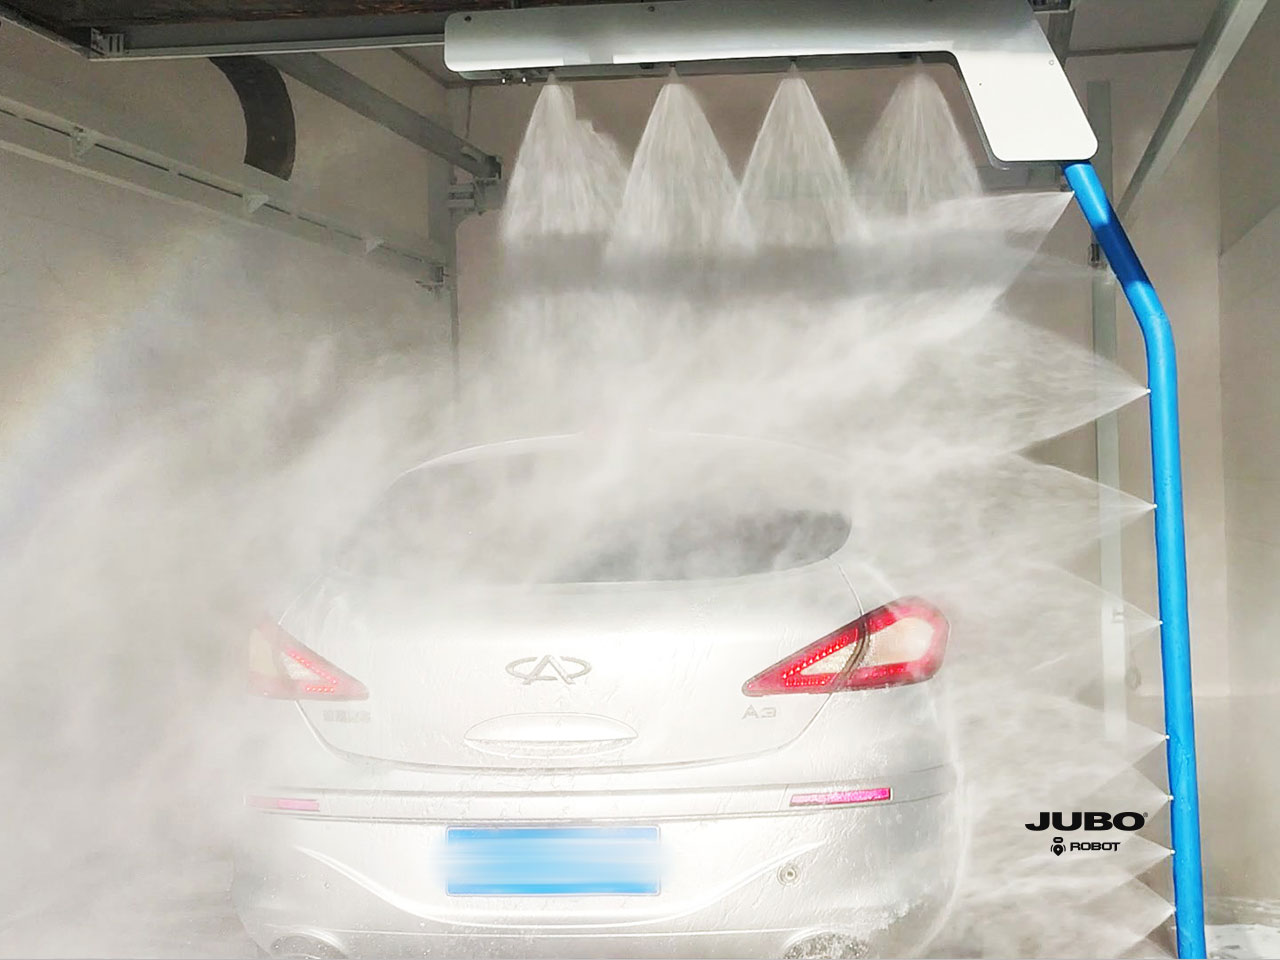 Touchless car wash,Touchfree car wash - VENTUS